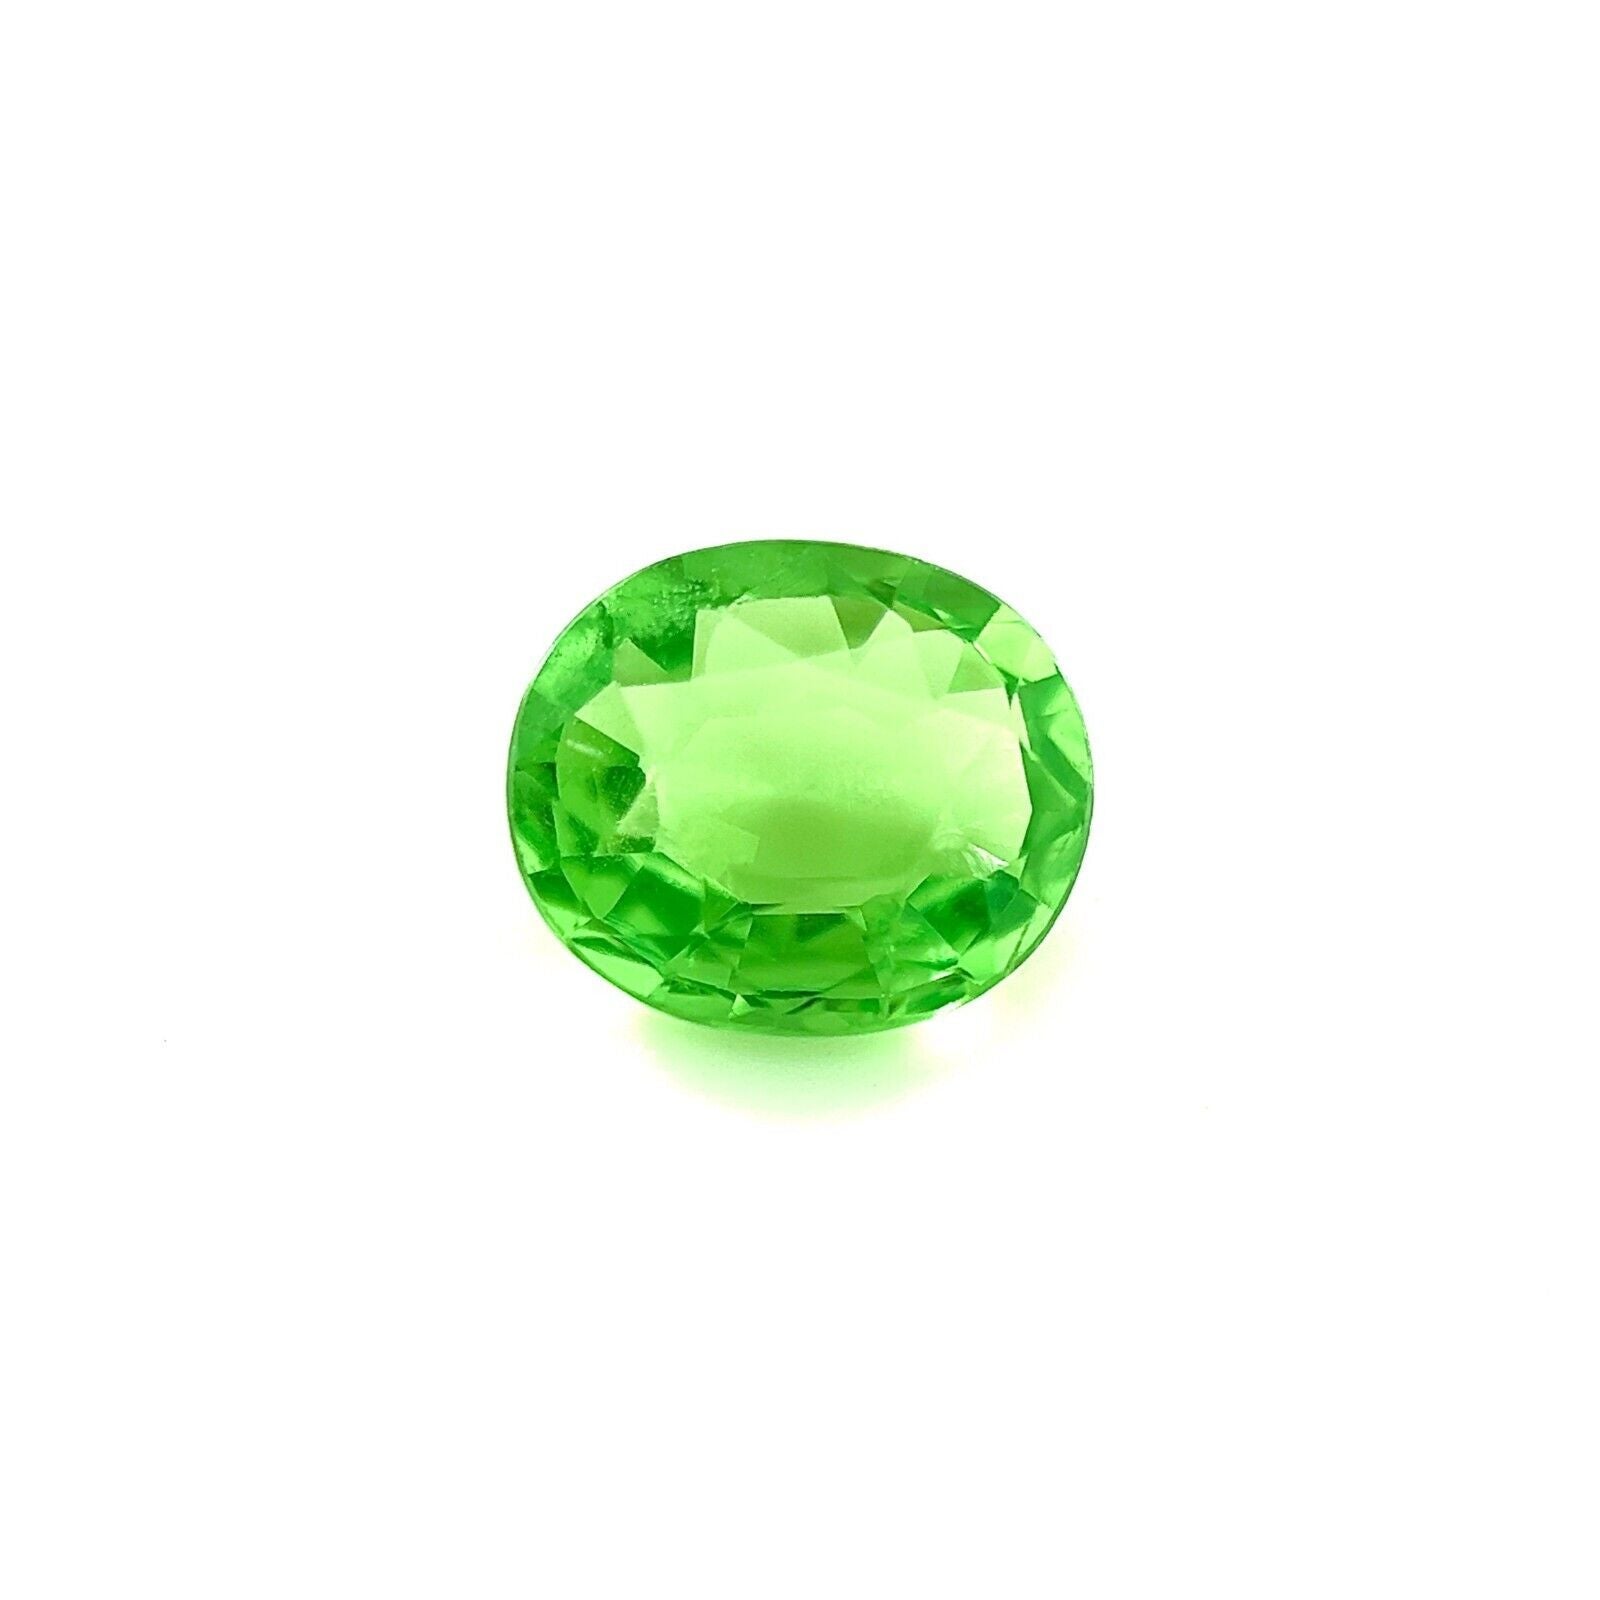 Pierre précieuse non sertie grenat tsavorite vert vif de 1,33 carat, taille ovale, 7,4 x 6,3 mm